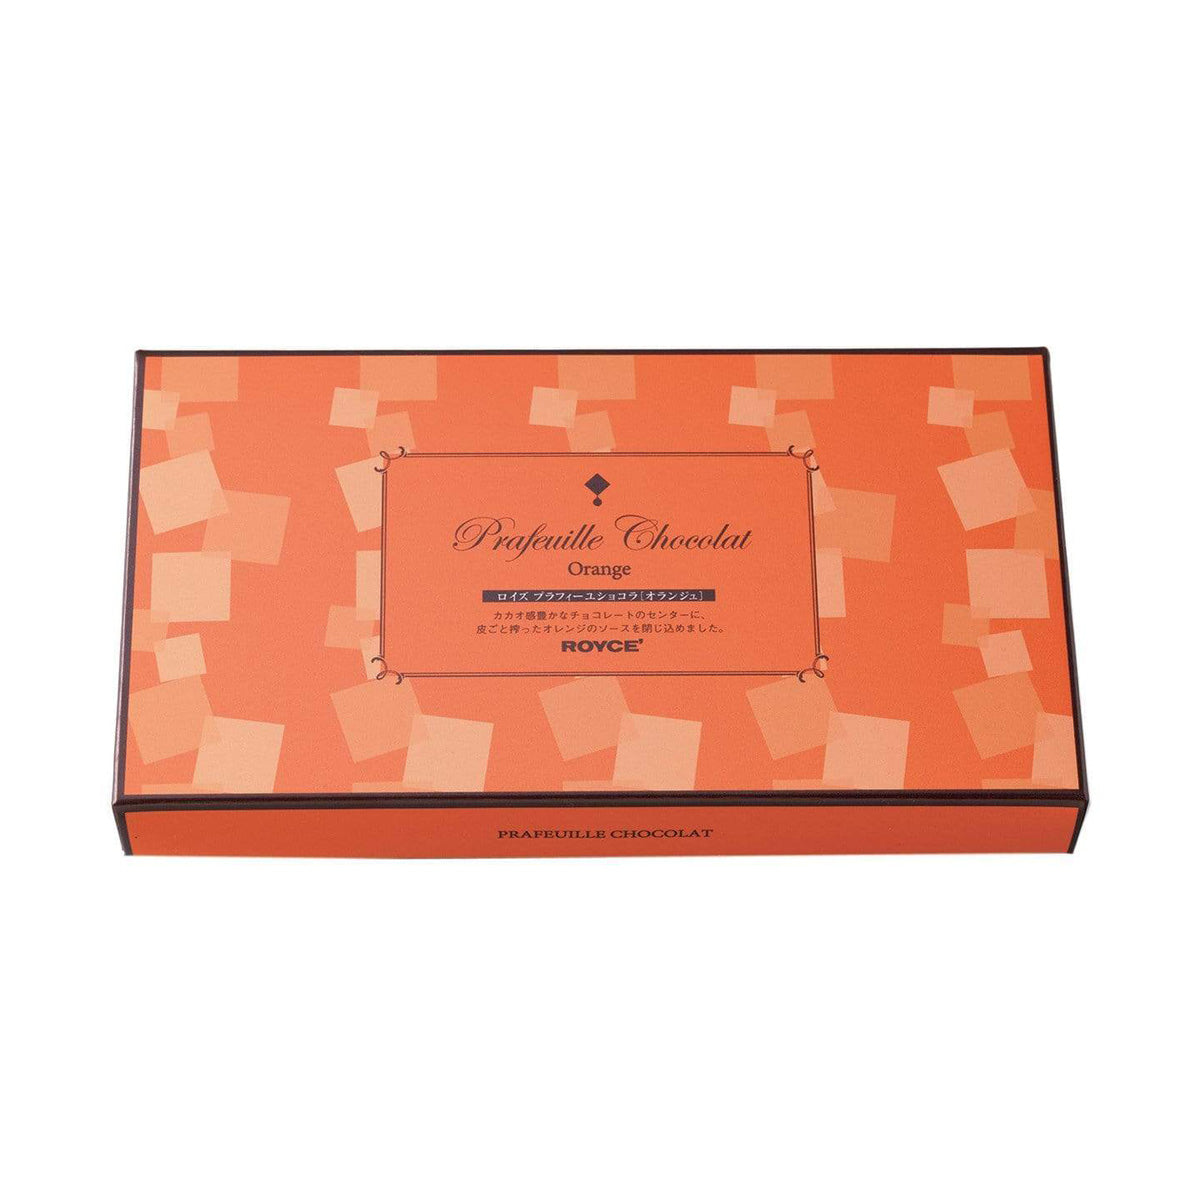 ROYCE' Chocolate - Prafeuille Chocolat "Orange" - Image shows an orange box with cube prints. Text says Prafeuille Chocolat Orange ROYCE'. Text below says Prafeuille Chocolat.